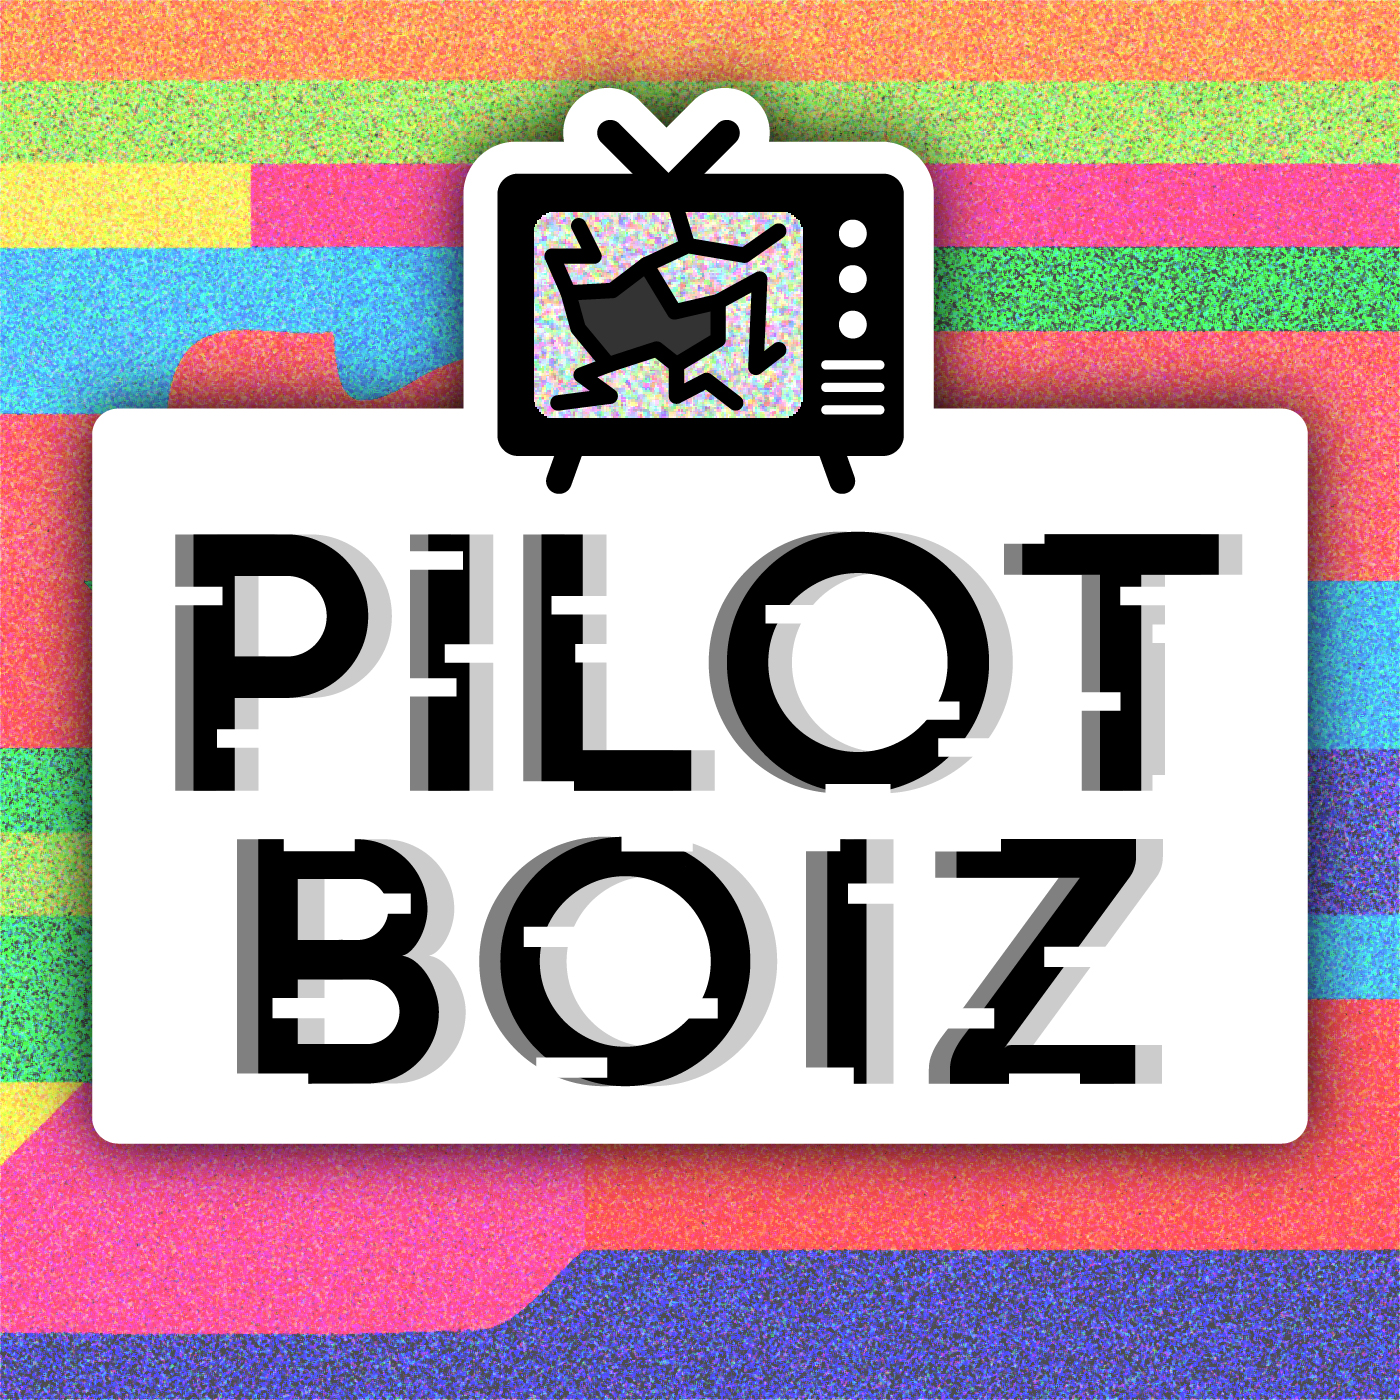 Pilot Boiz